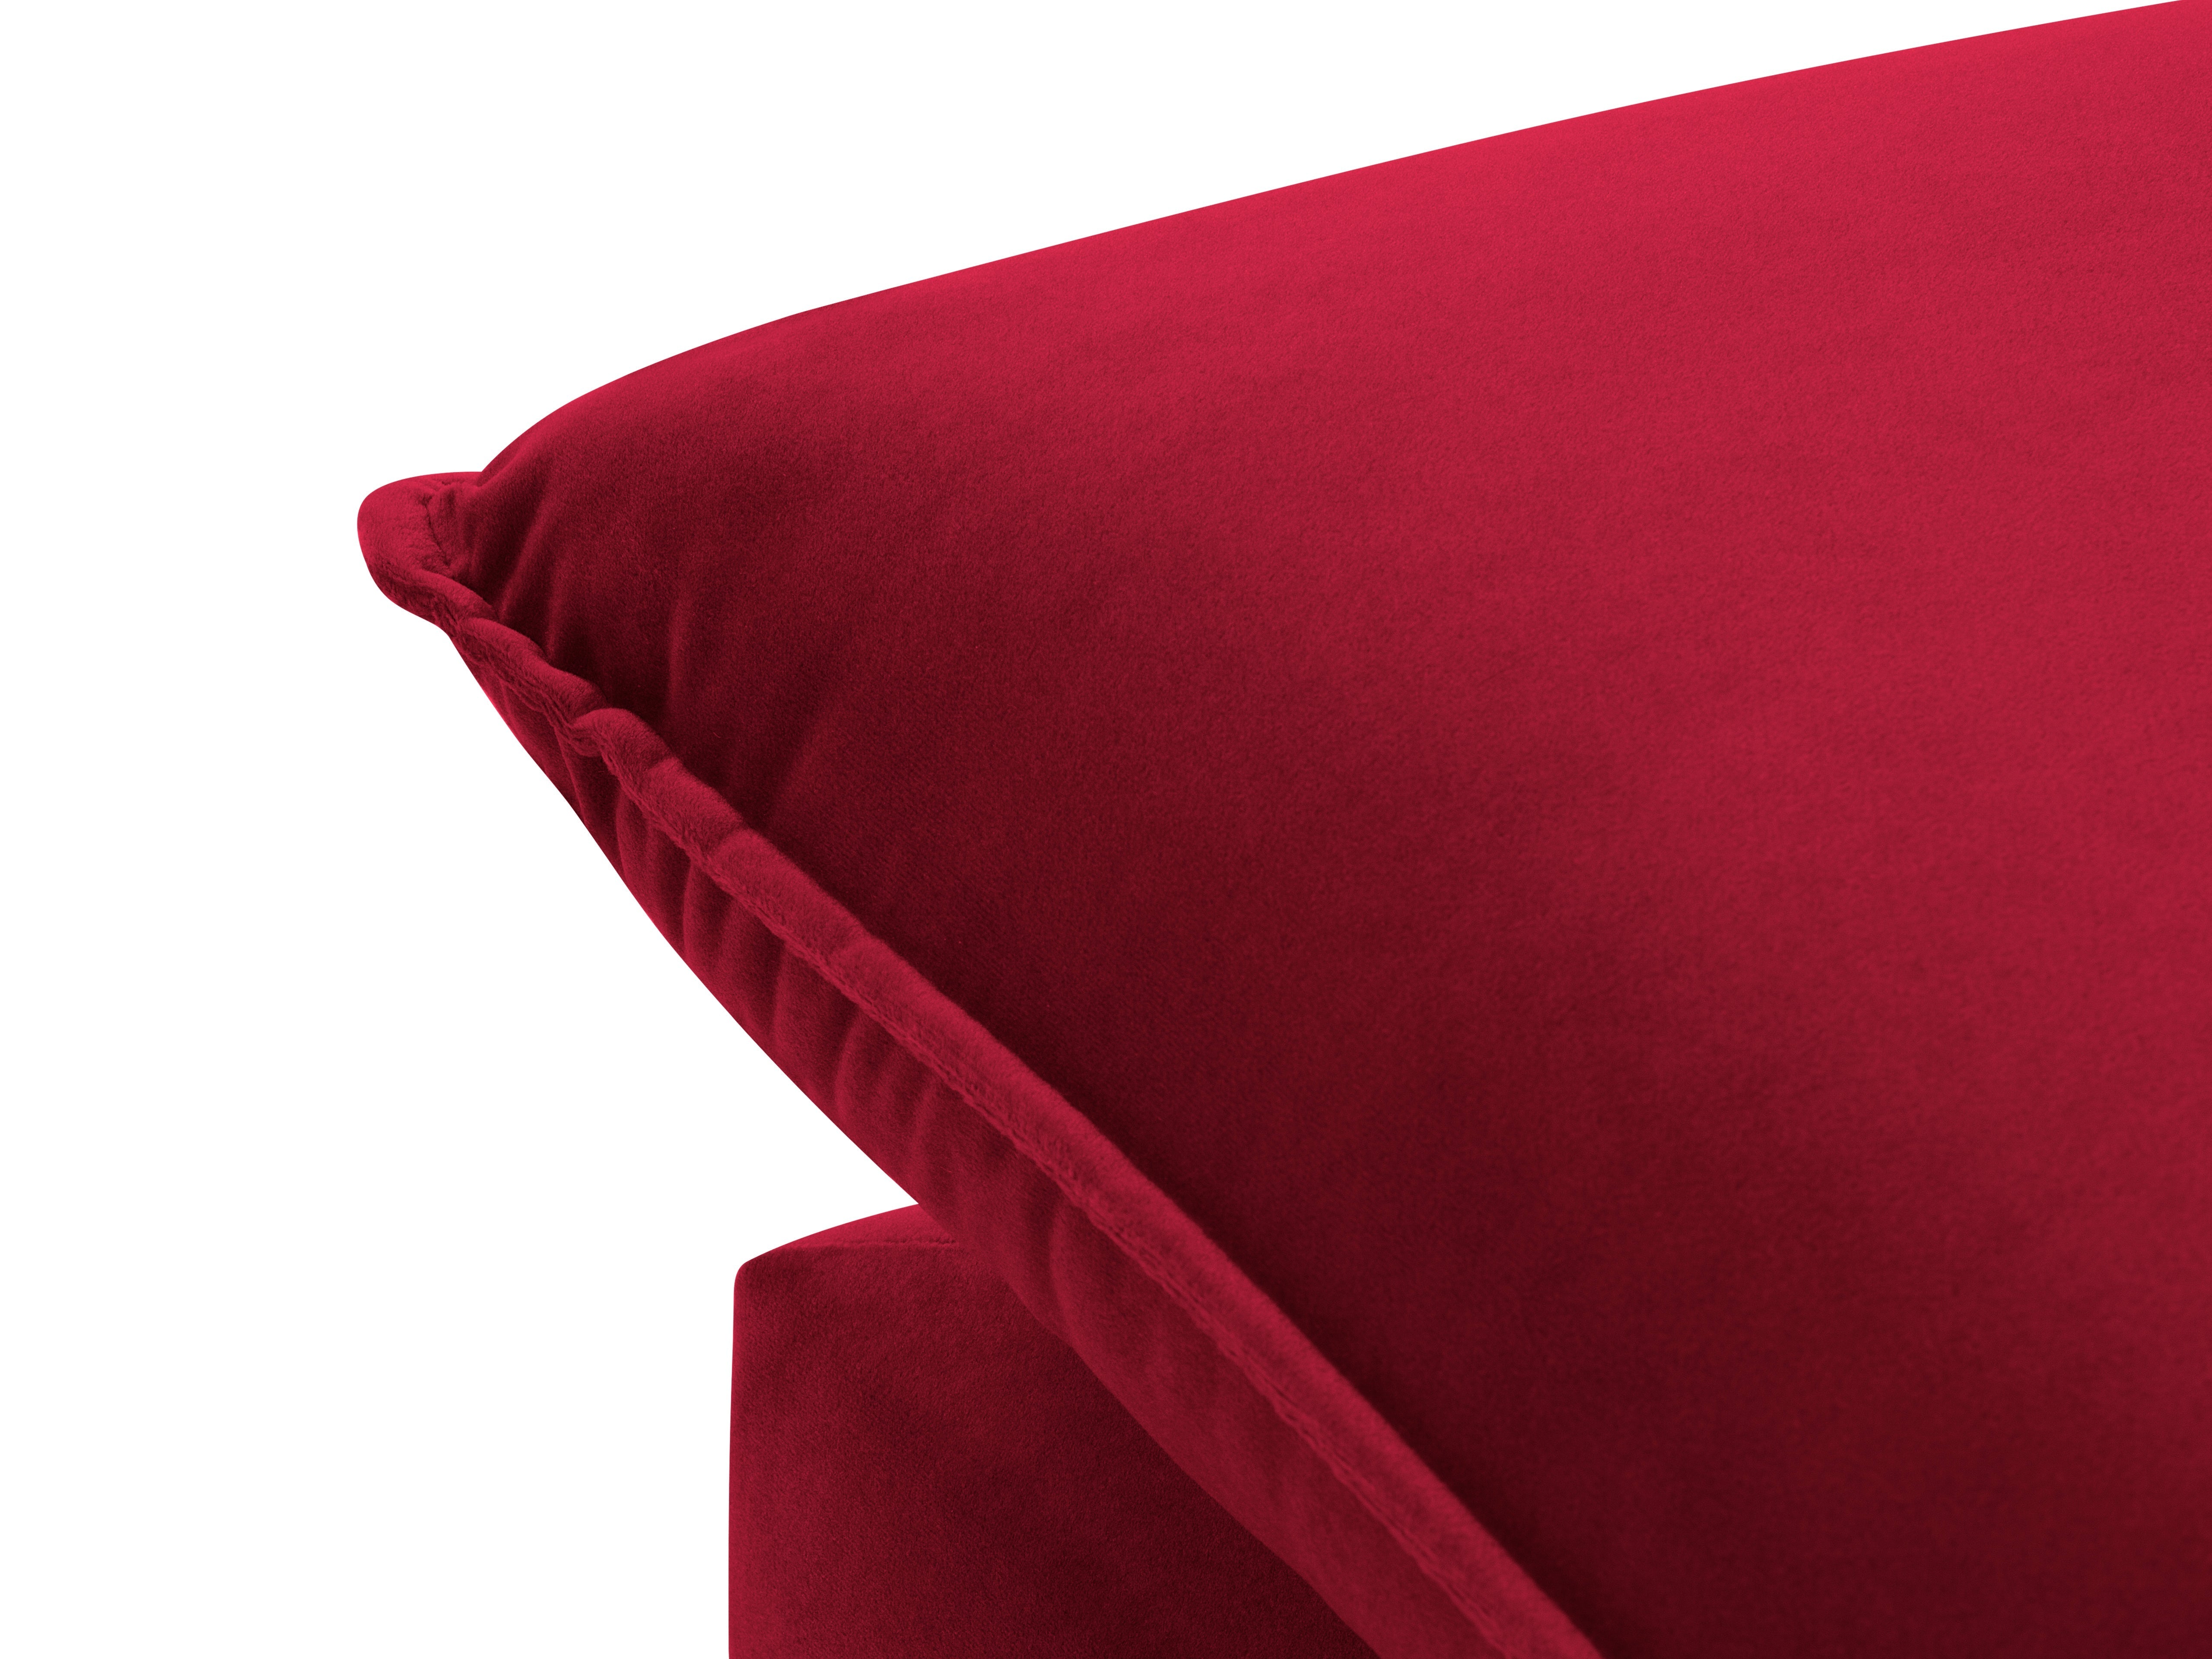 velvet red shock -shield with glossy